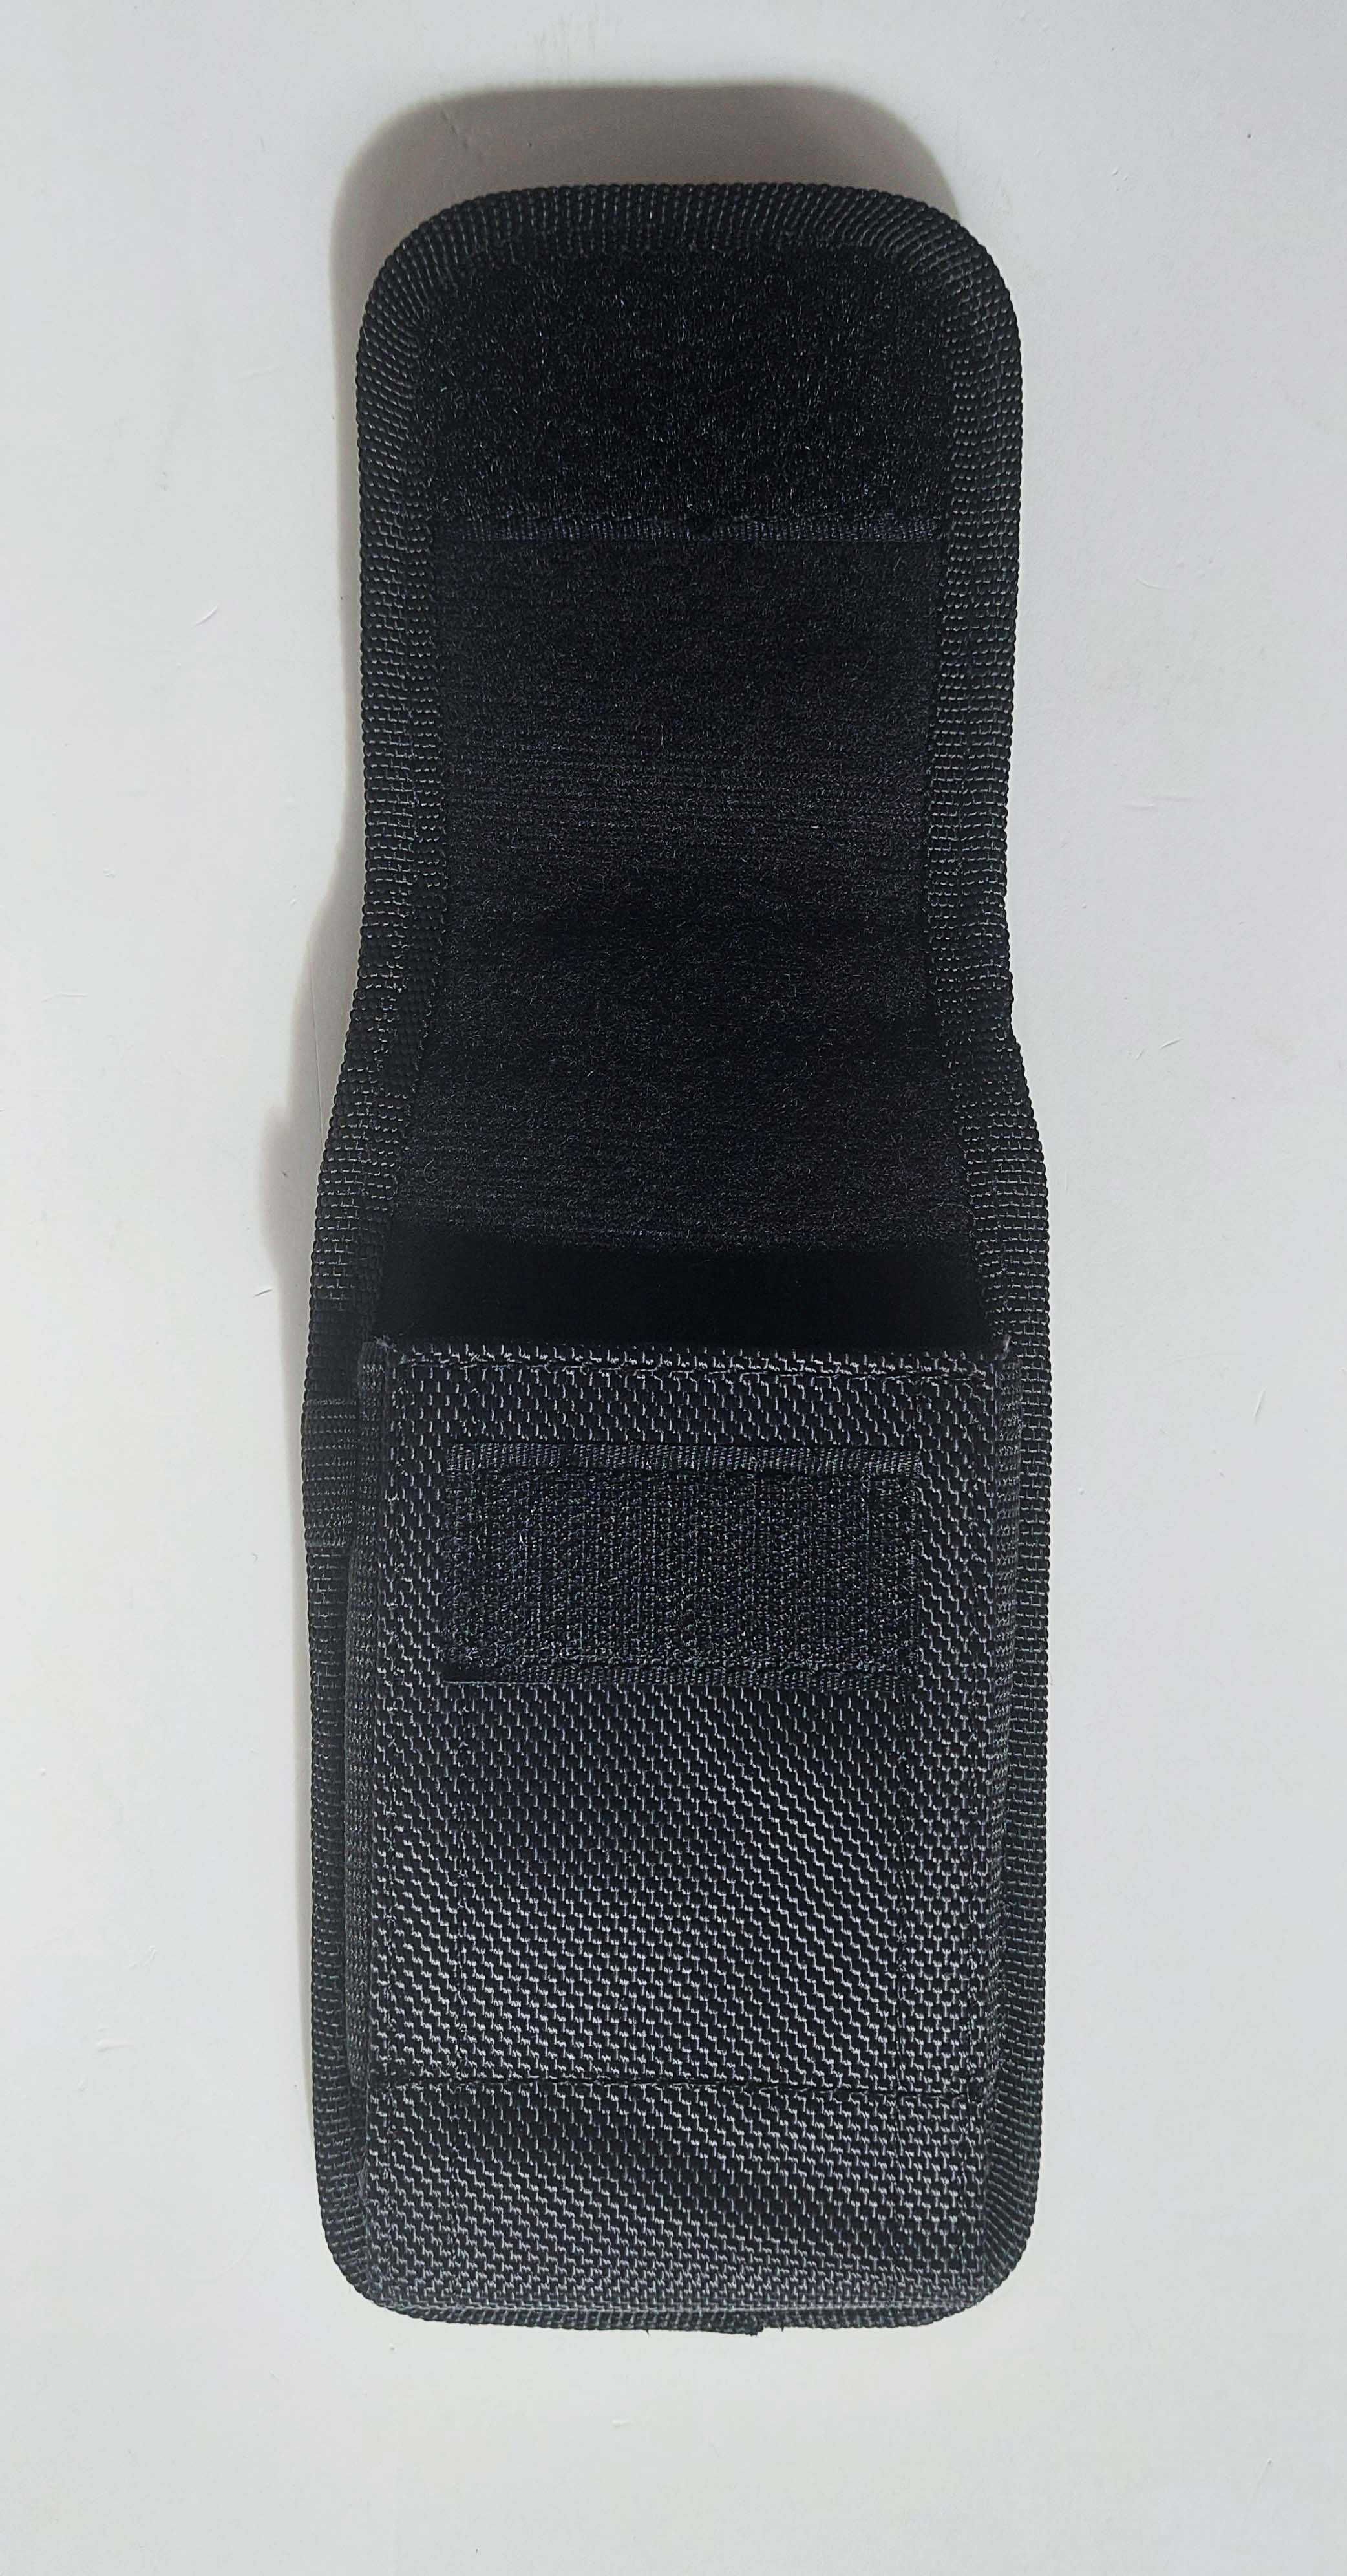 Bolsa de nylon alta resistência para guardar telemóvel